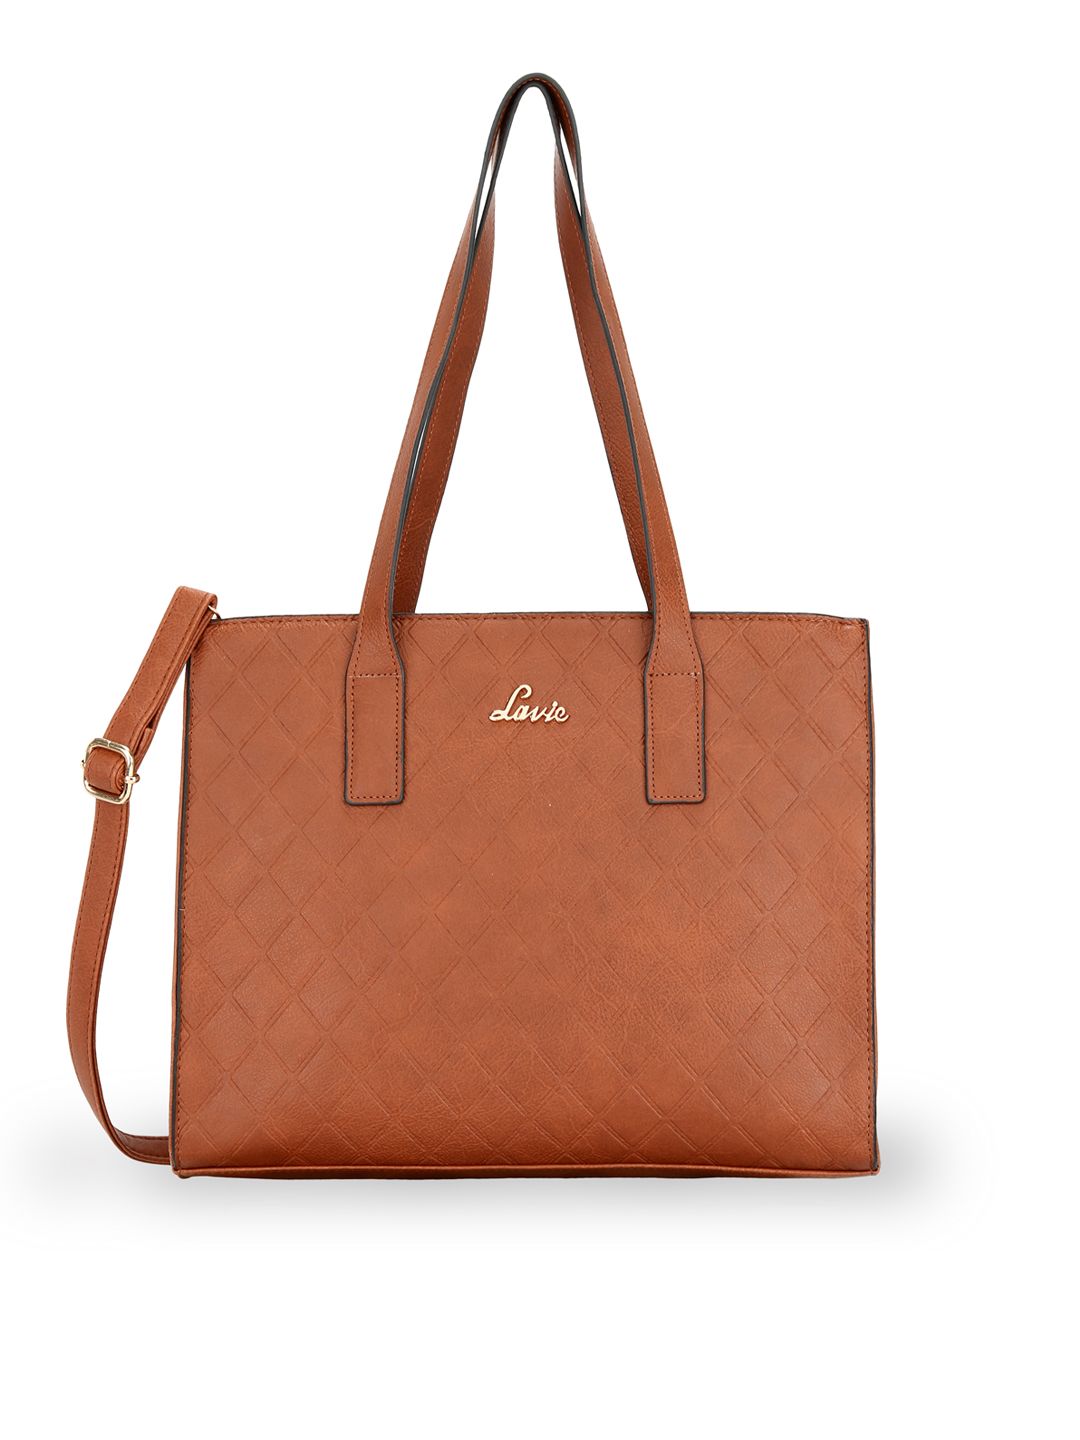 Lavie Brown Textured Shoulder Bag Price in India